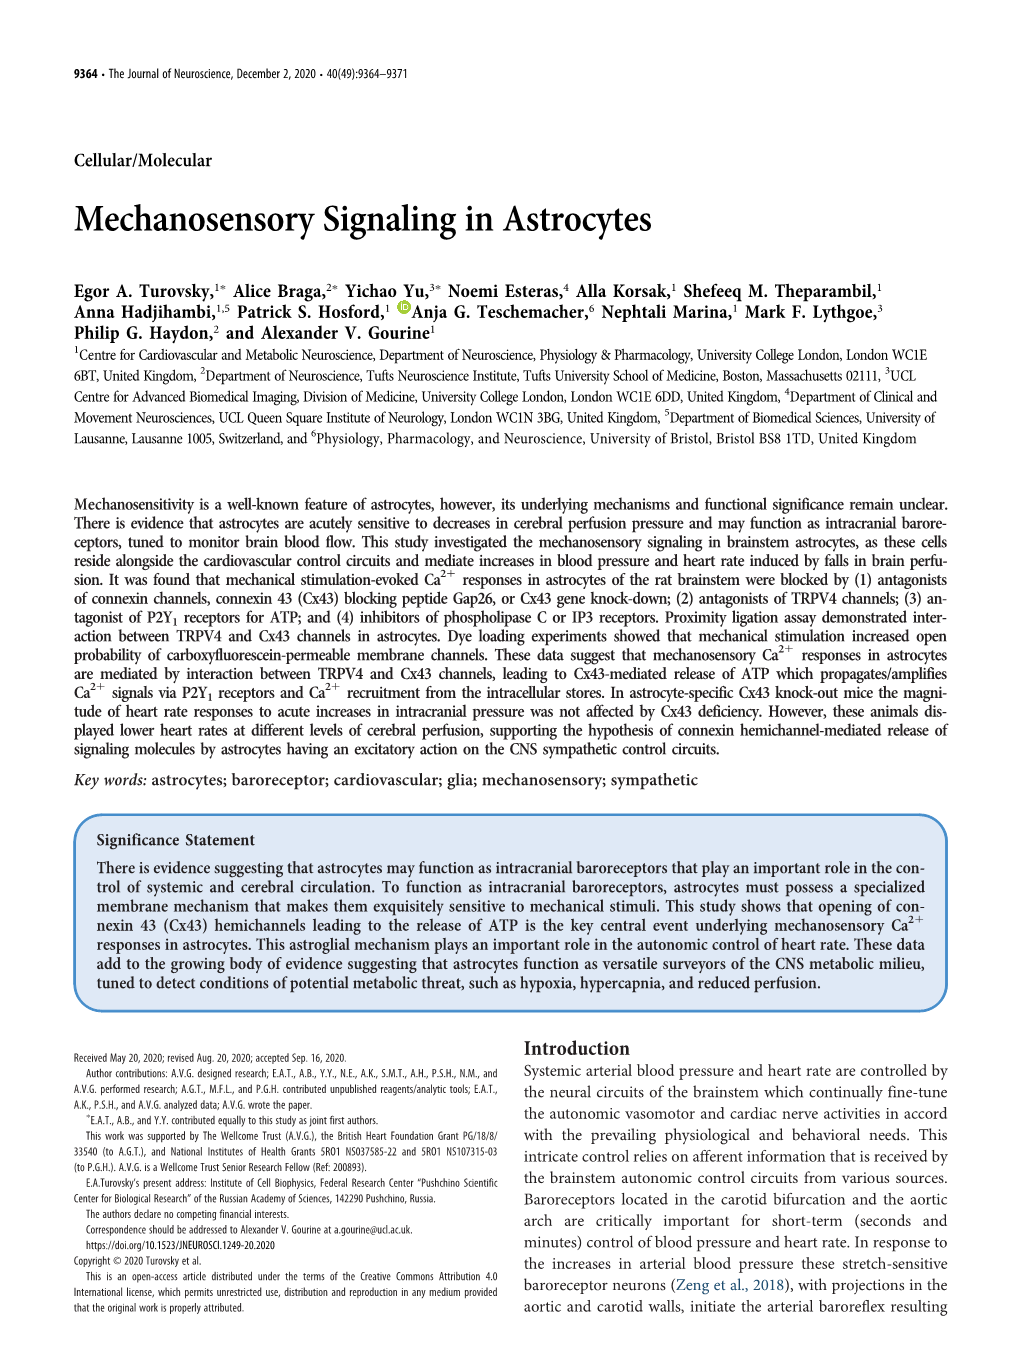 Mechanosensory Signaling in Astrocytes